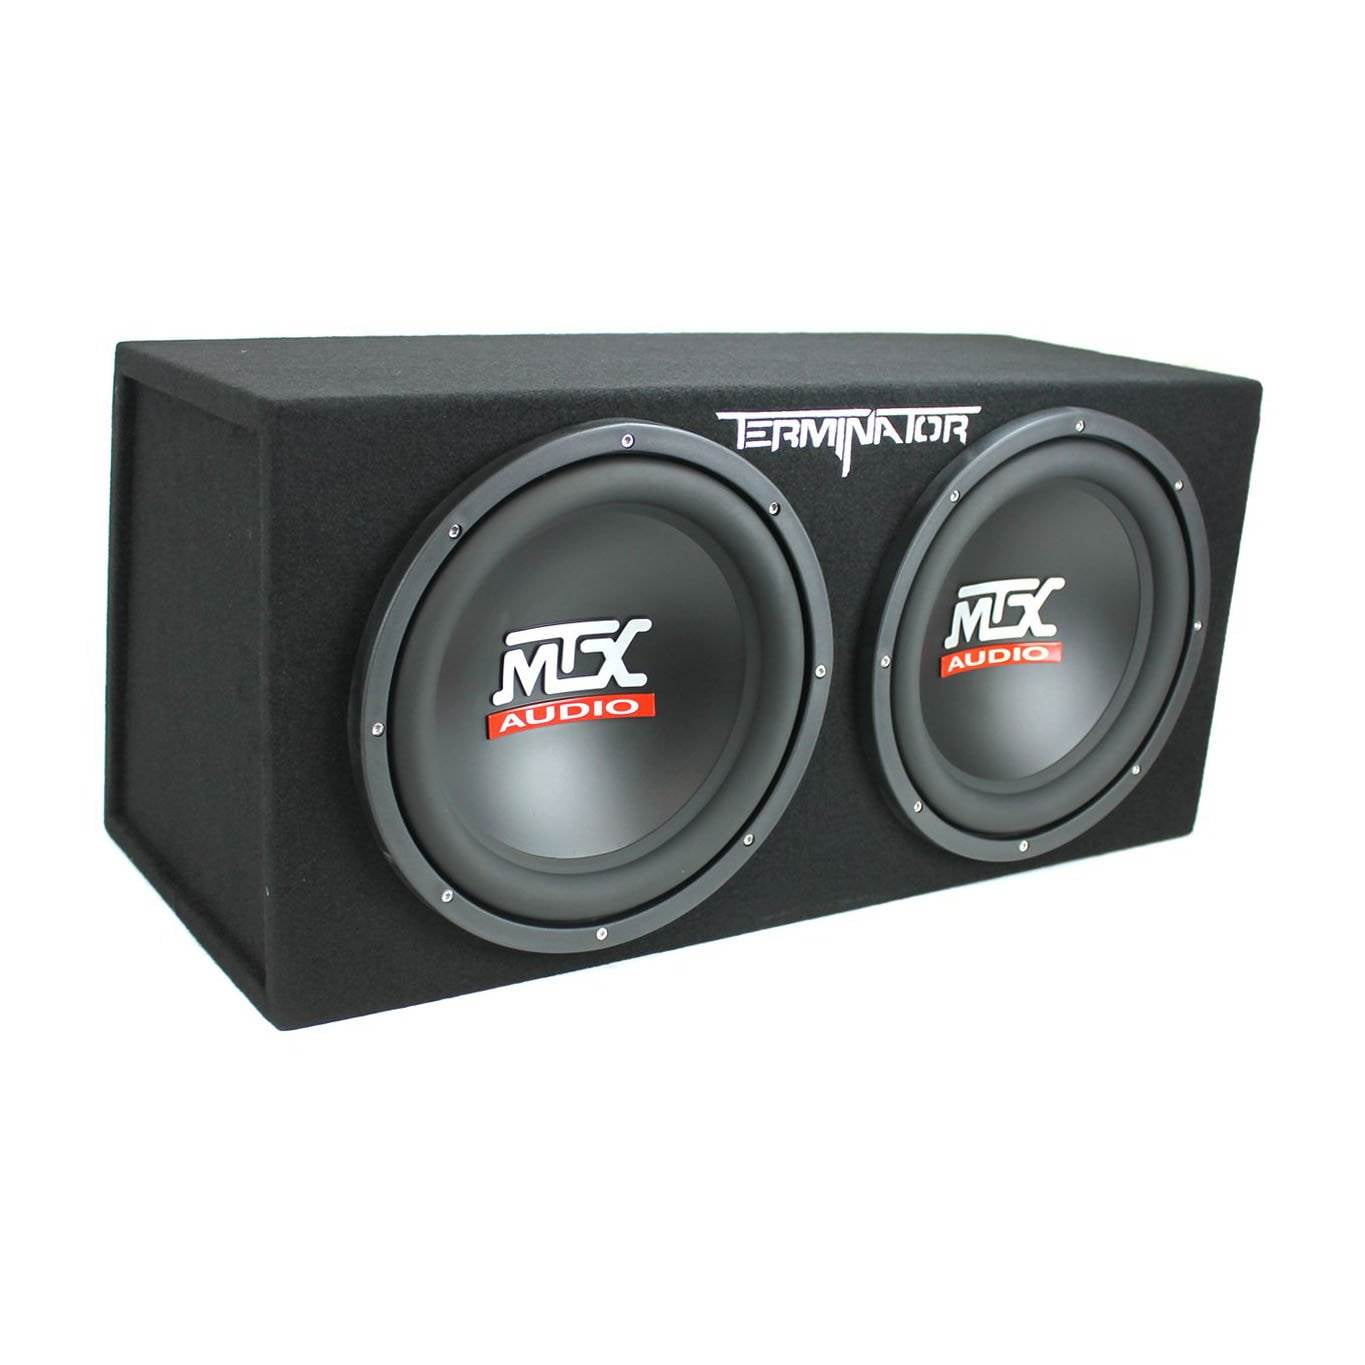 Subwoofer Box 12 Inch Sub Dual MTX Audio Terminator Series TNP212D2 Enclosure